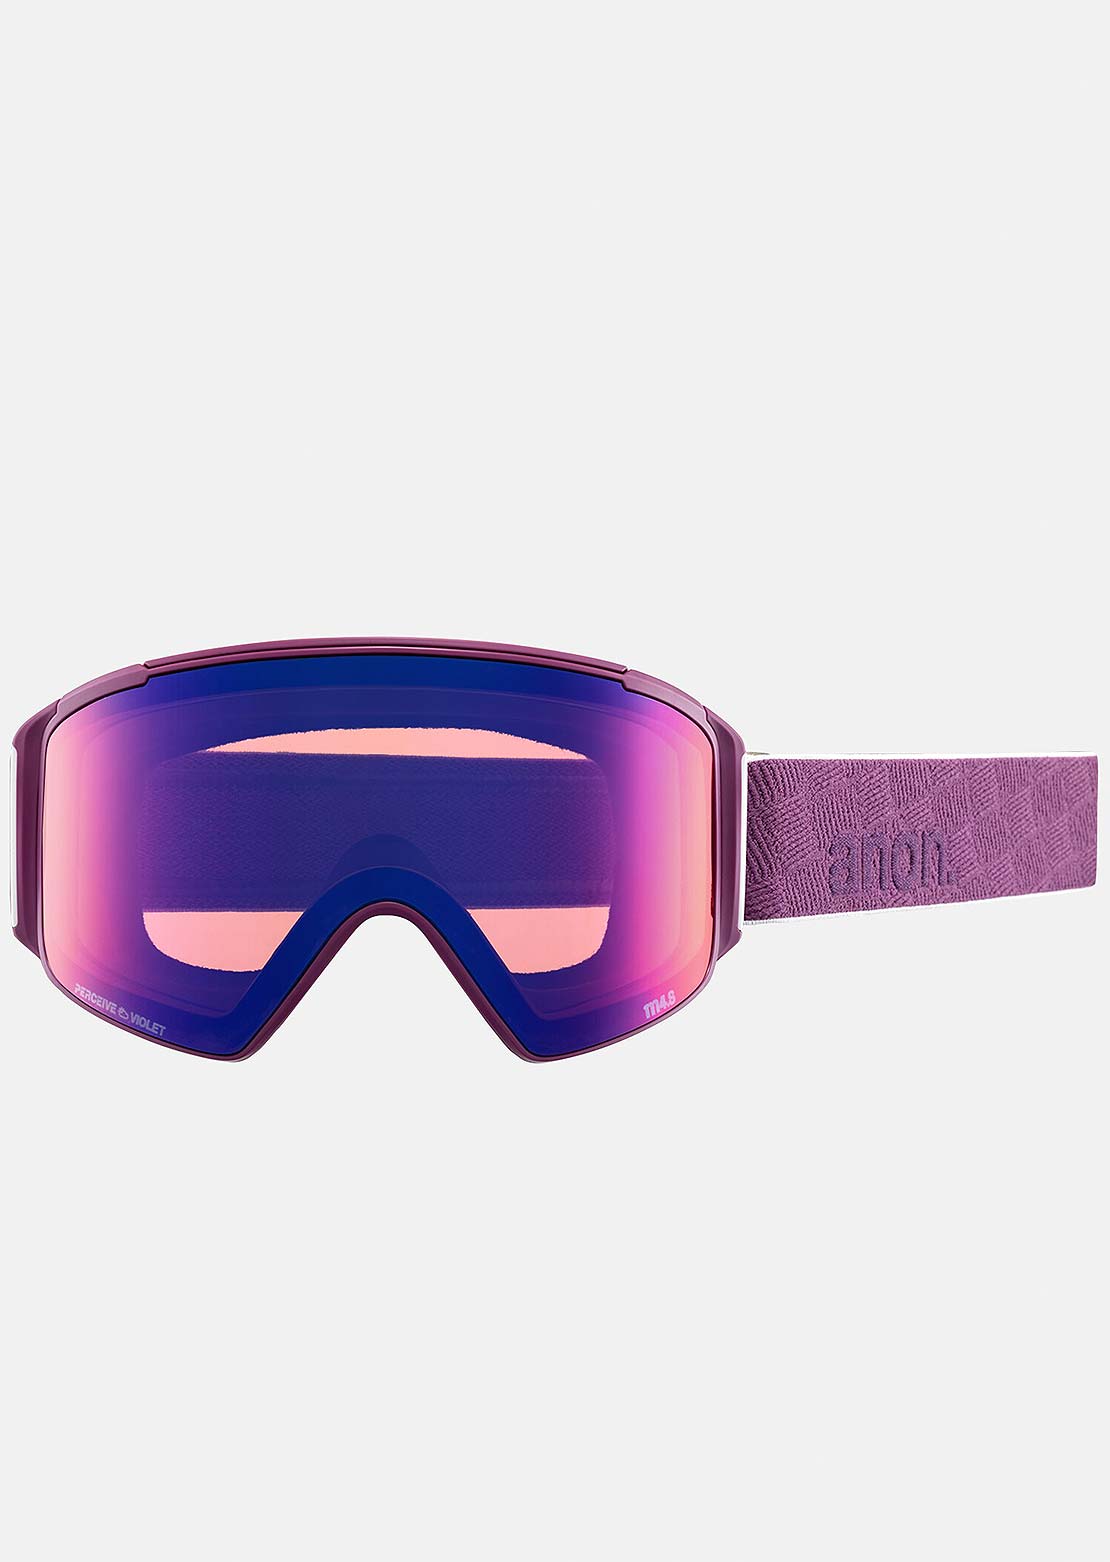 Anon M4S Cylindrical Goggles + Bonus Lens + MFI Face Mask Grape/Perceive Sunny Onyx